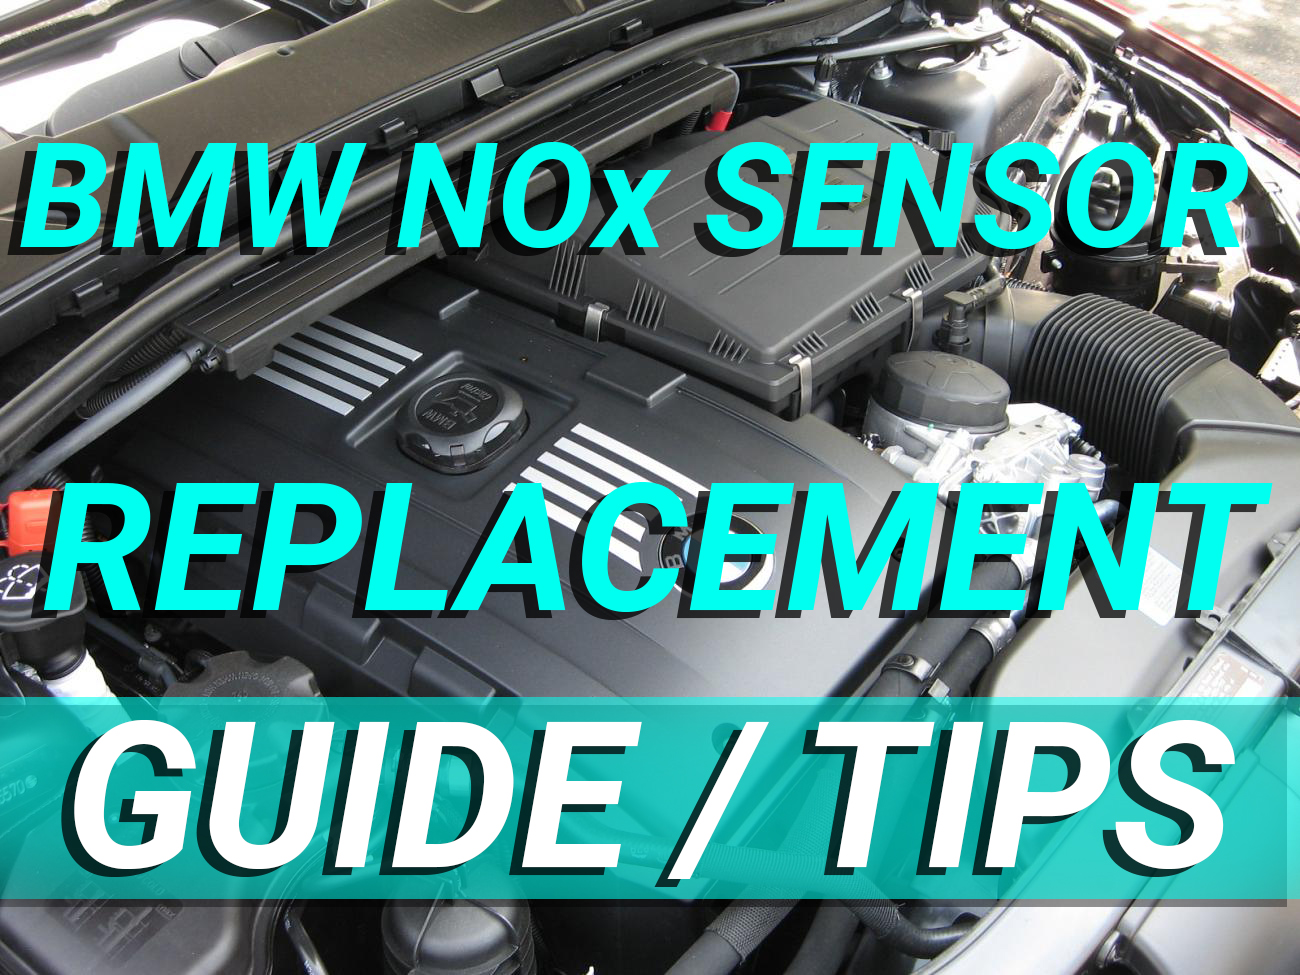 BMW NOx Sensor Replacement Guide Tips